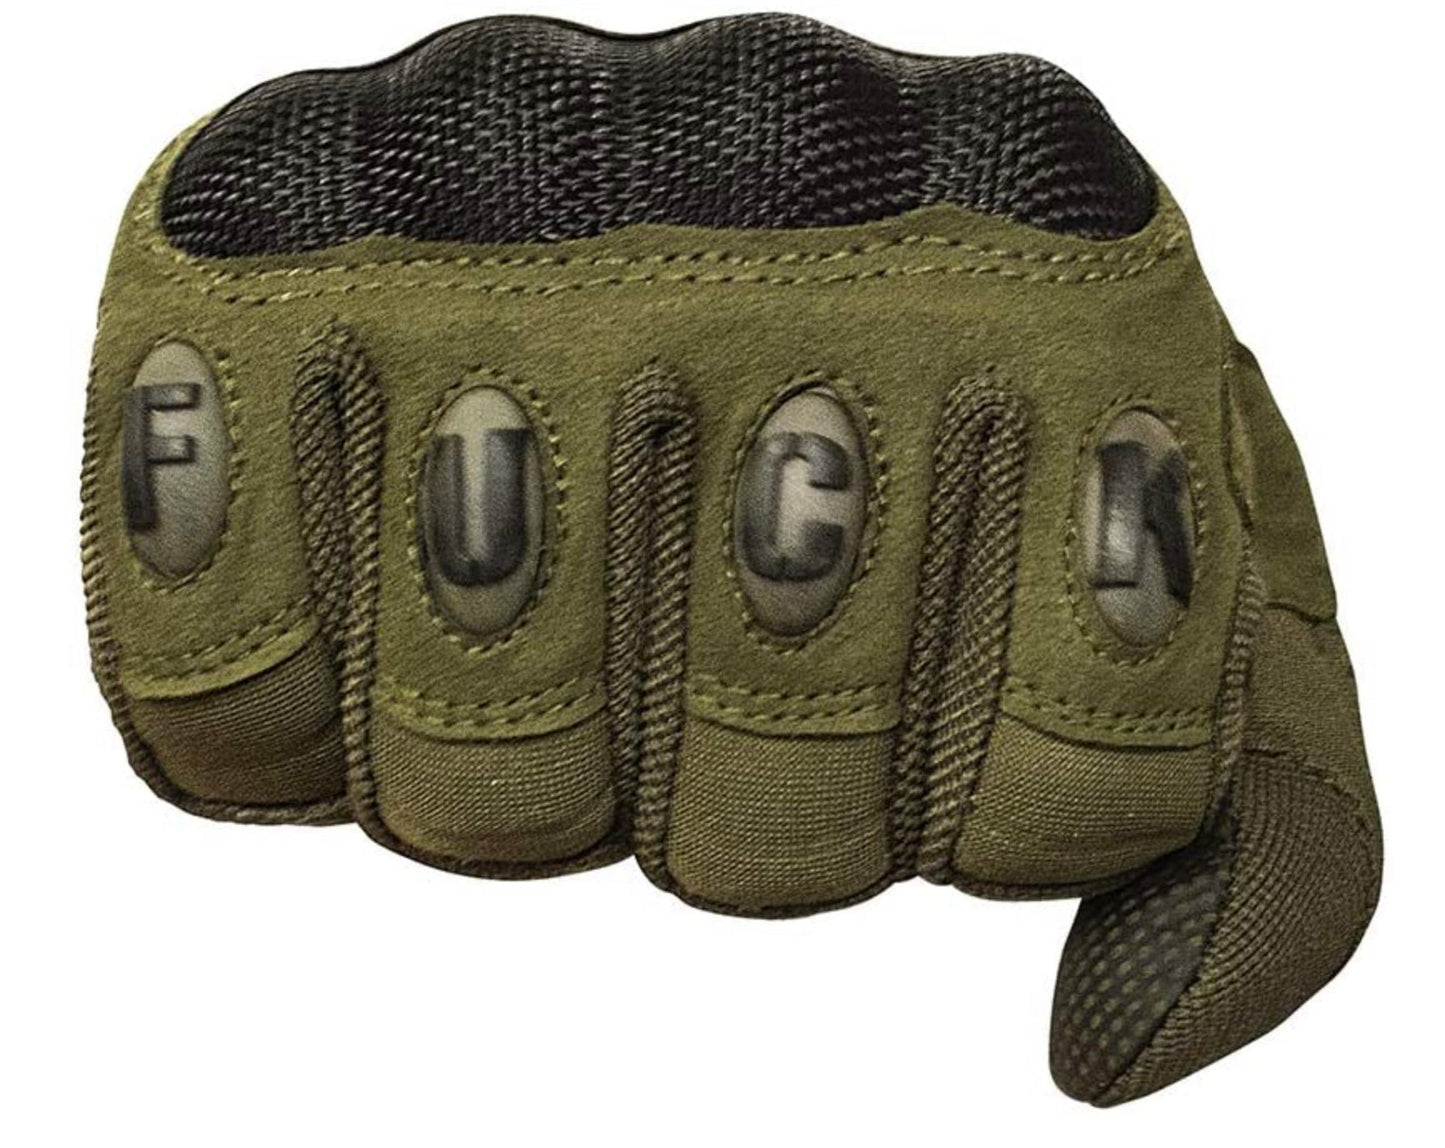 Enola Gay MRDR Gloves